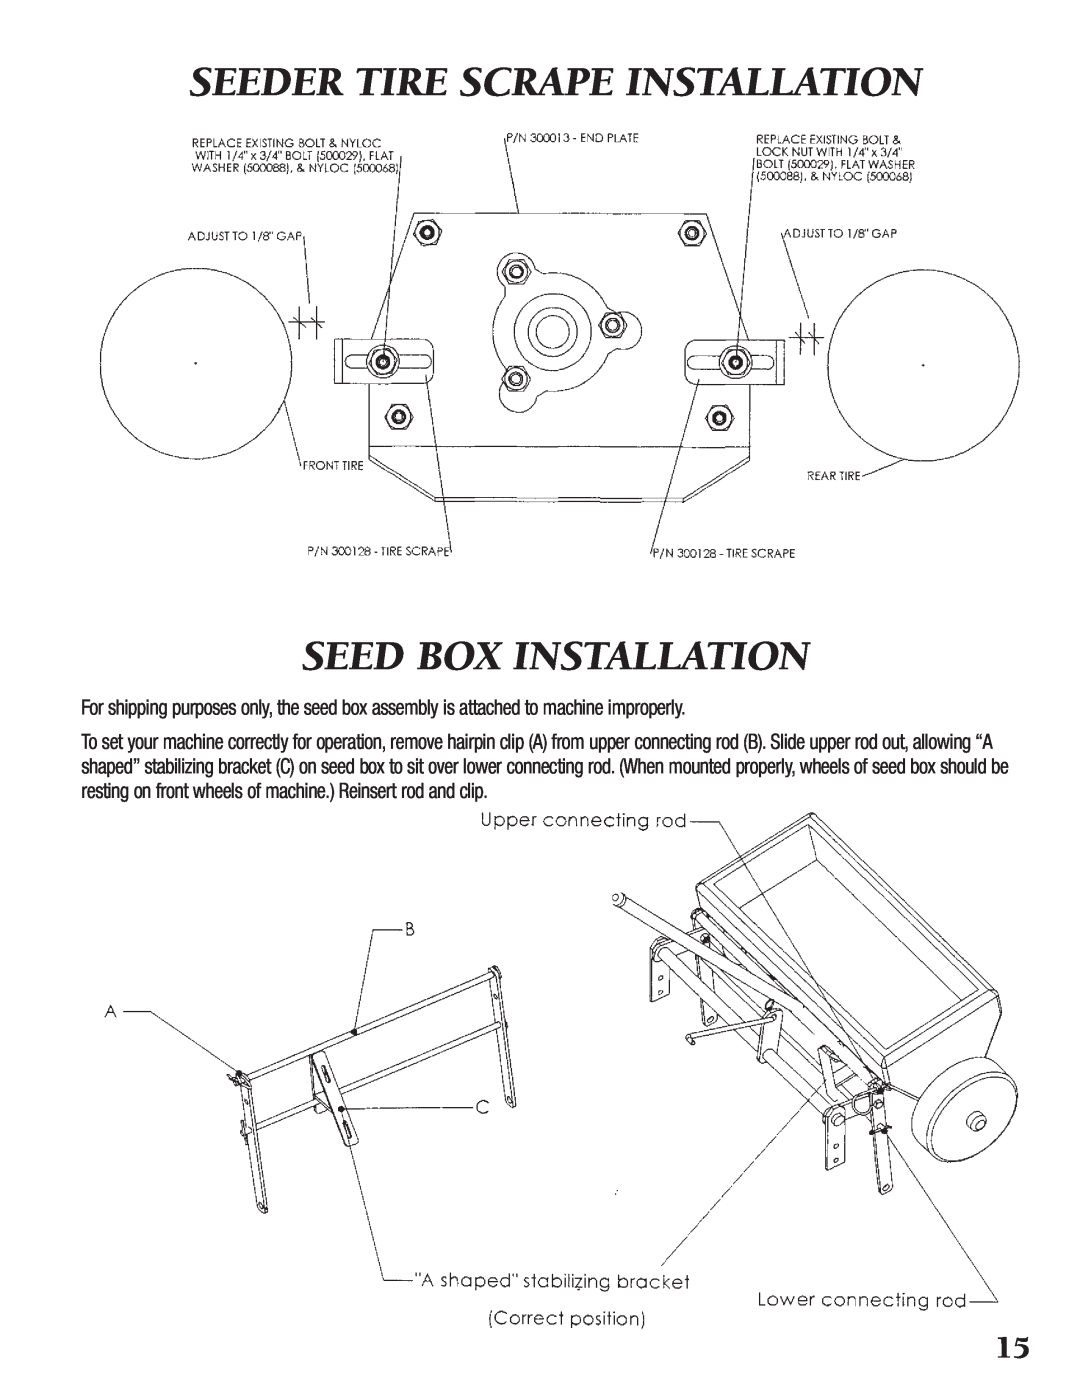 Little Wonder TSS-20, TRS-20 manual Seeder Tire Scrape Installation, Seed Box Installation 